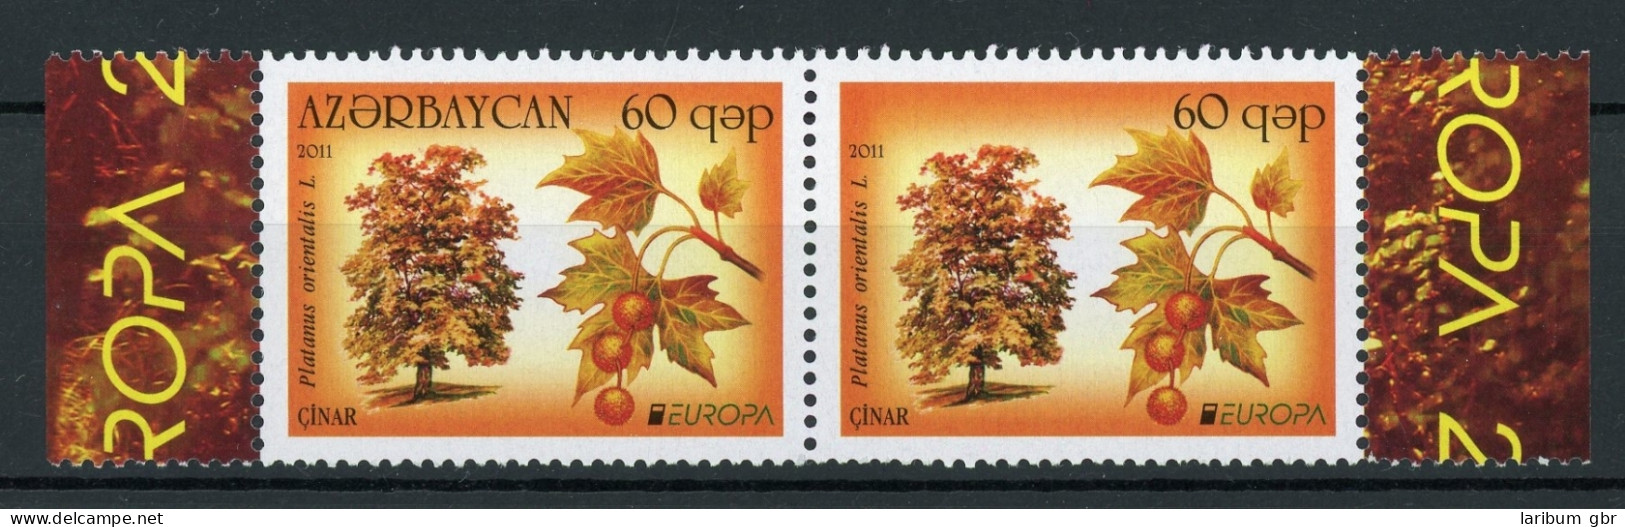 Aserbaidschan 841 I Postfrisch Fehlender Landesname, CEPT #HE030 - Azerbaijan